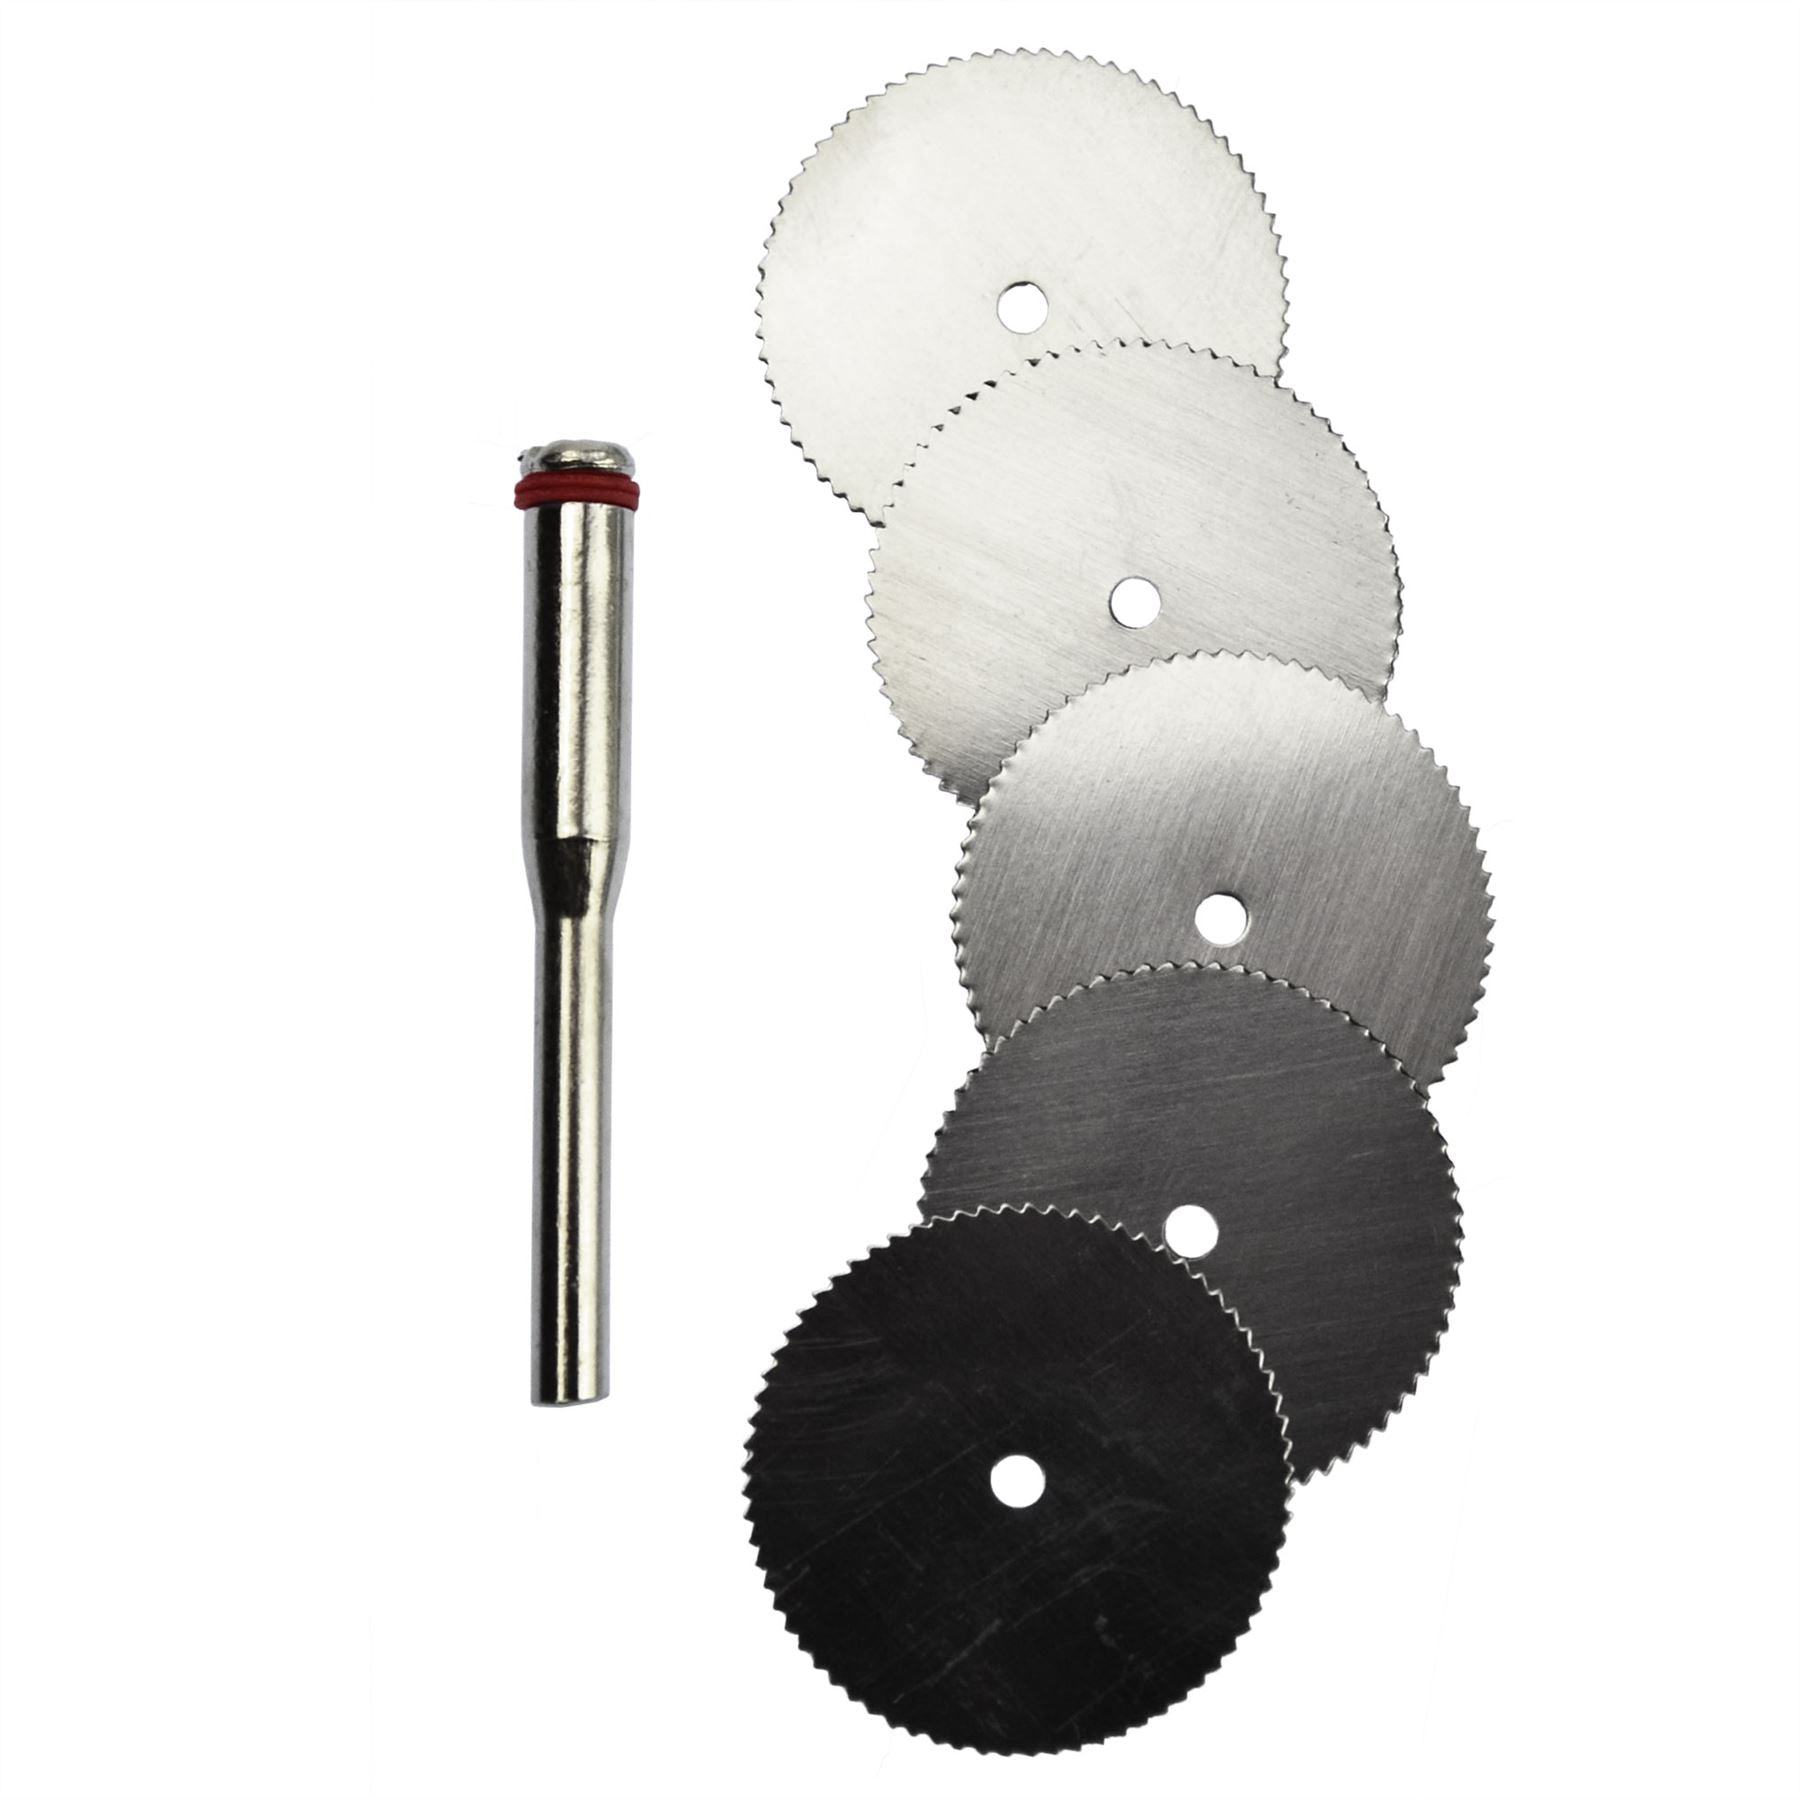 Rotary Tool HSS Saw Blade Cutting Circular Discs Set 22mm with 3.17mm Mandrel